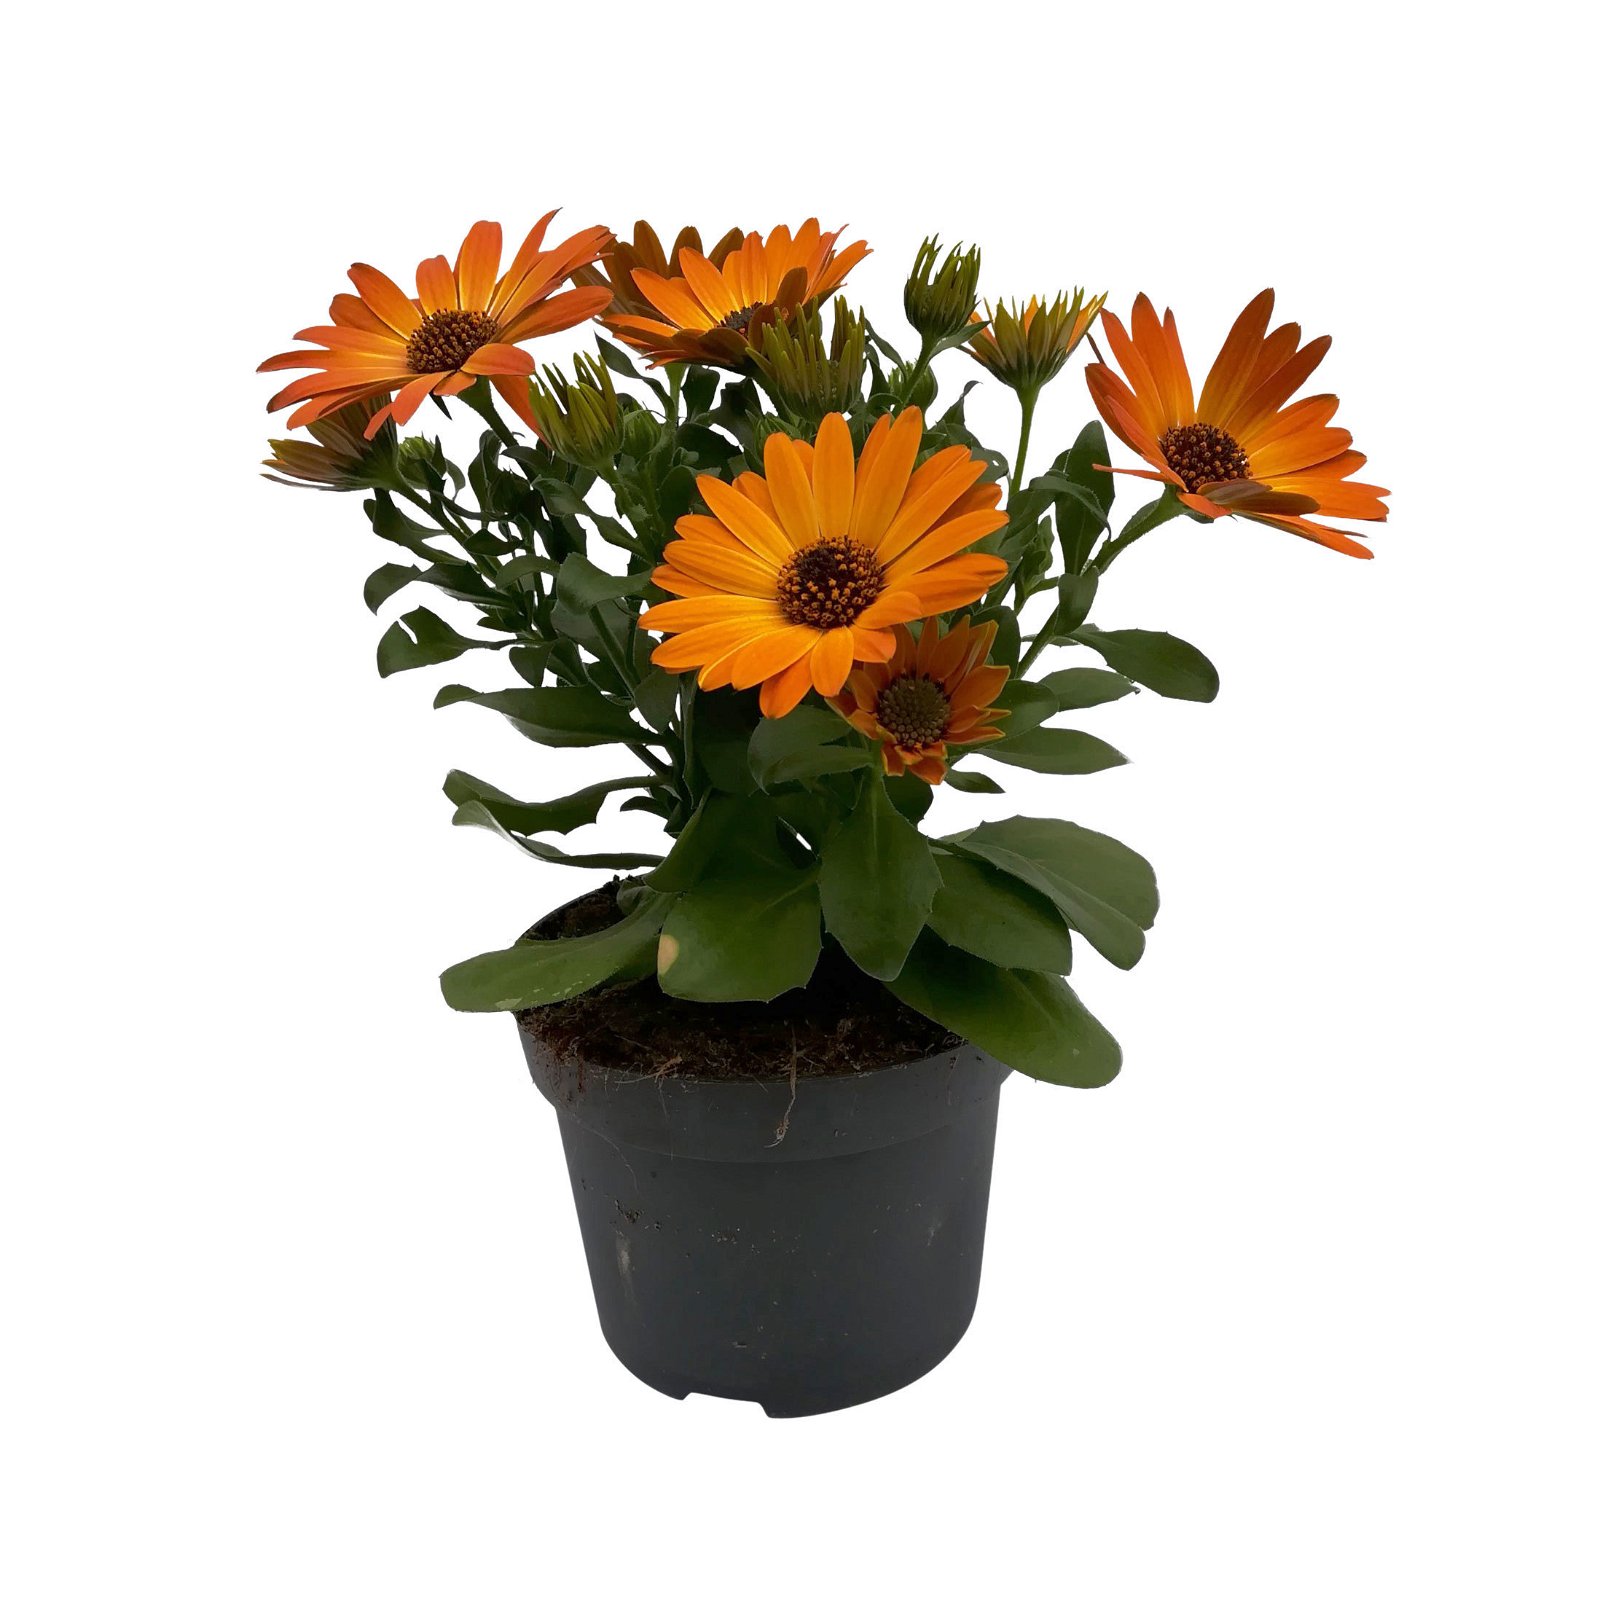 Kapkörbchen orange, Topf-Ø 12 cm, 6er-Set